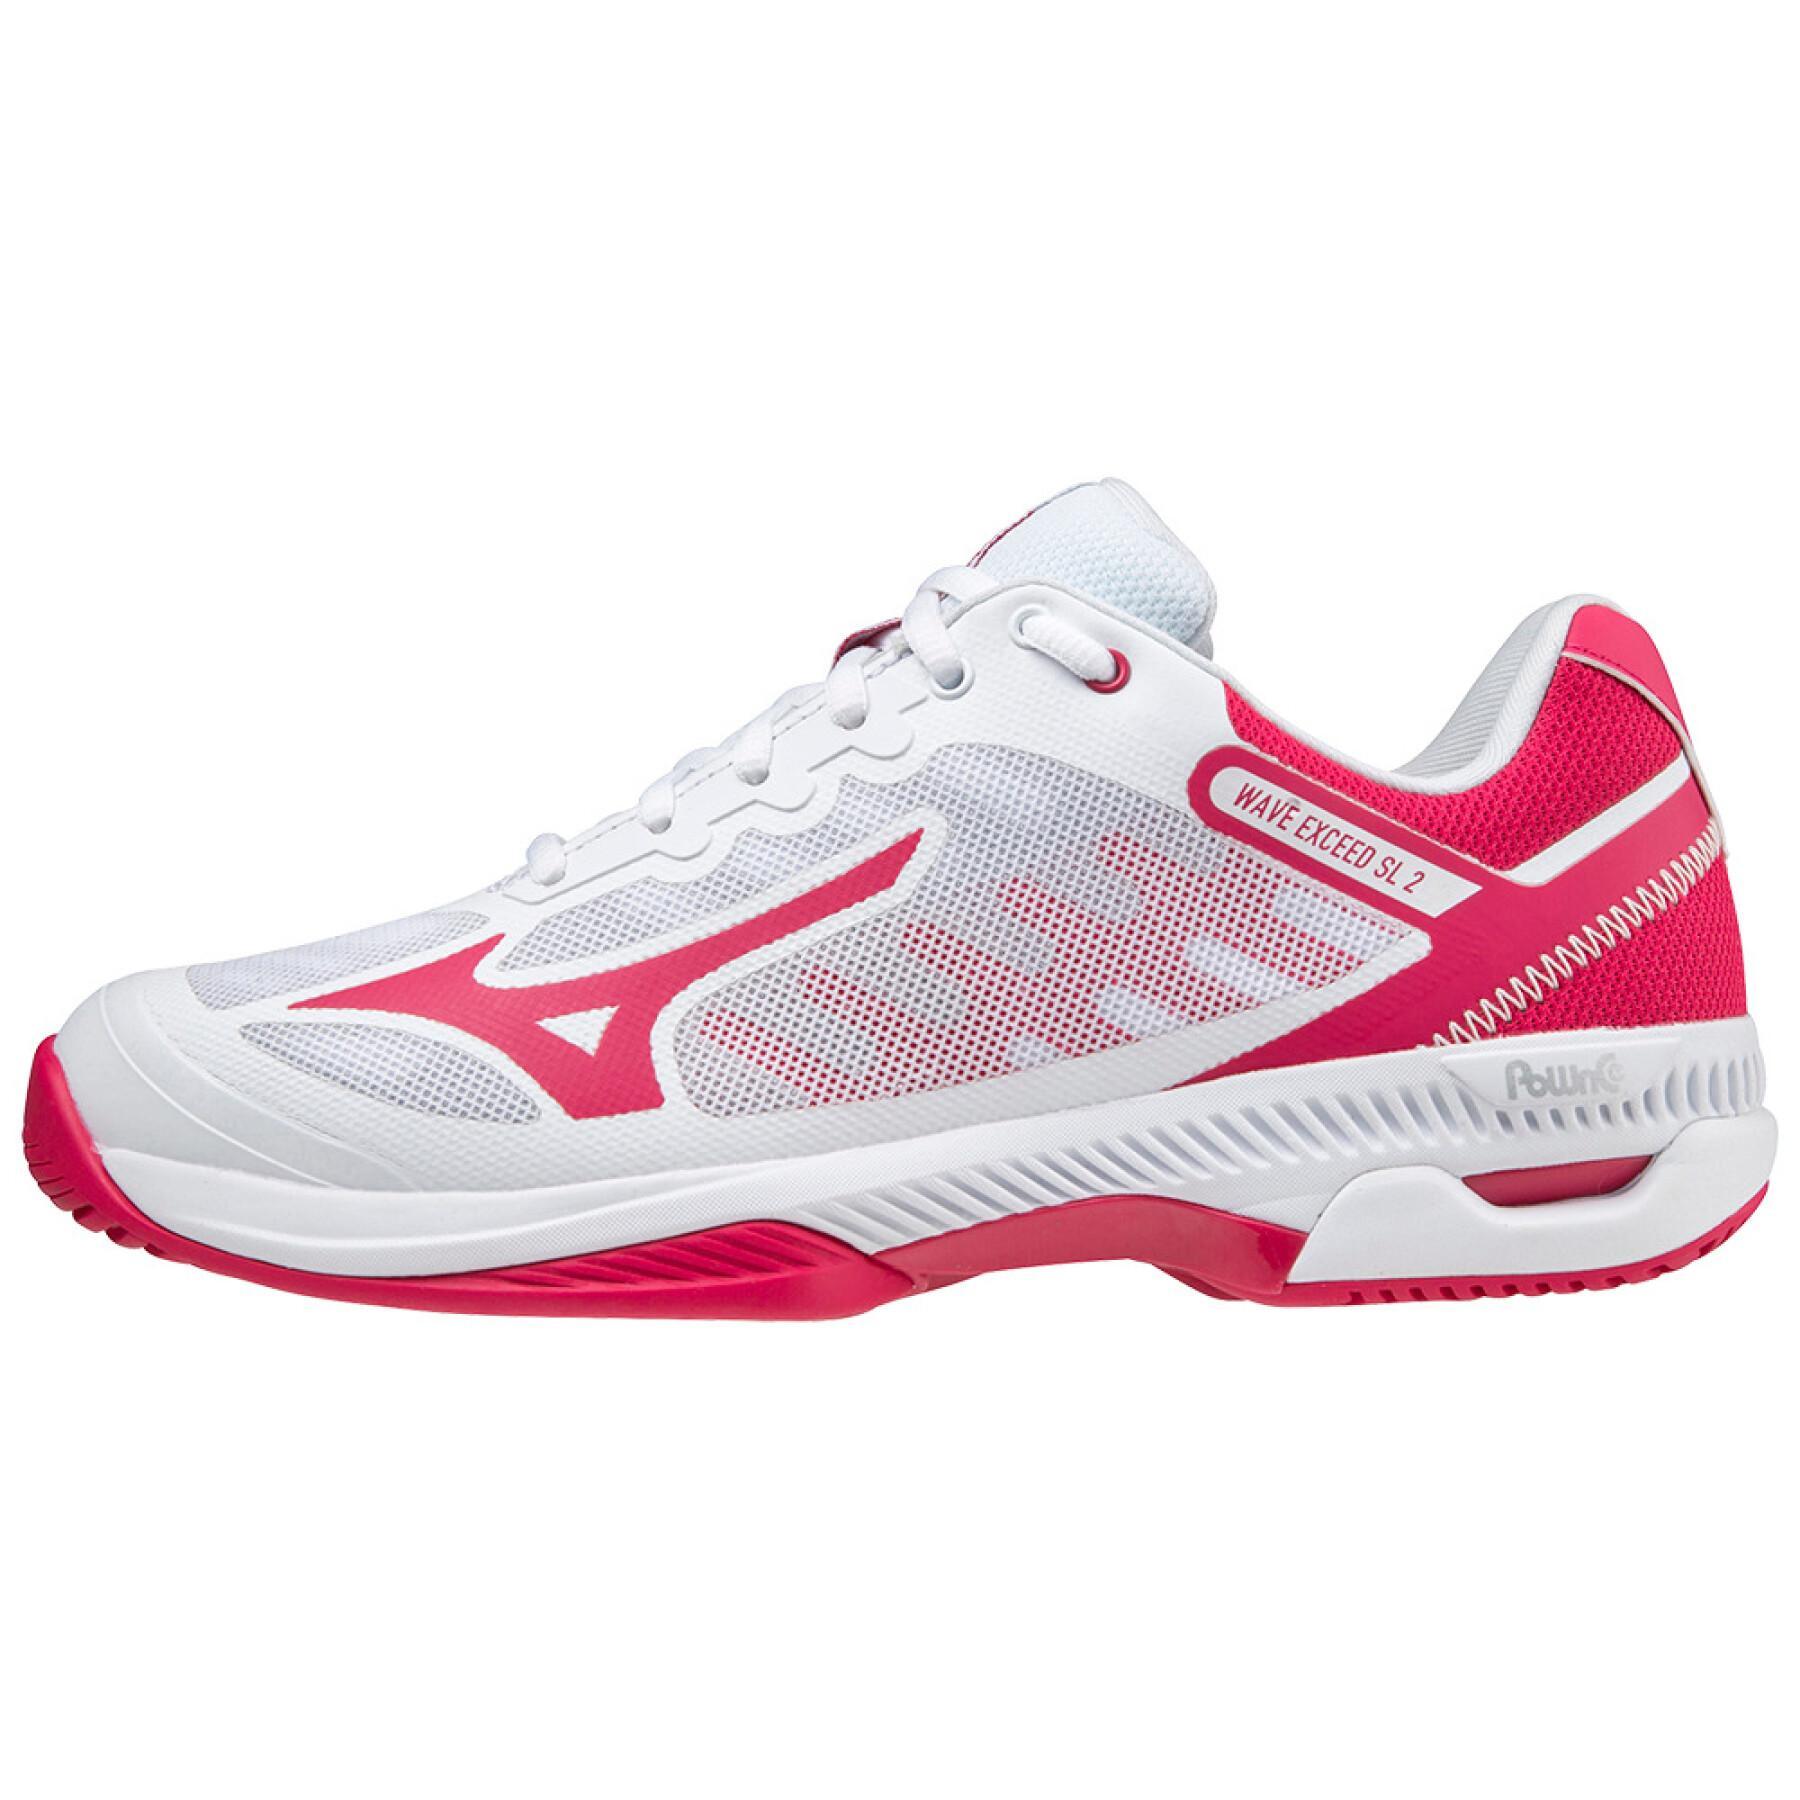 Chaussures de tennis femme Mizuno Wave Exceed Sl 2 AC